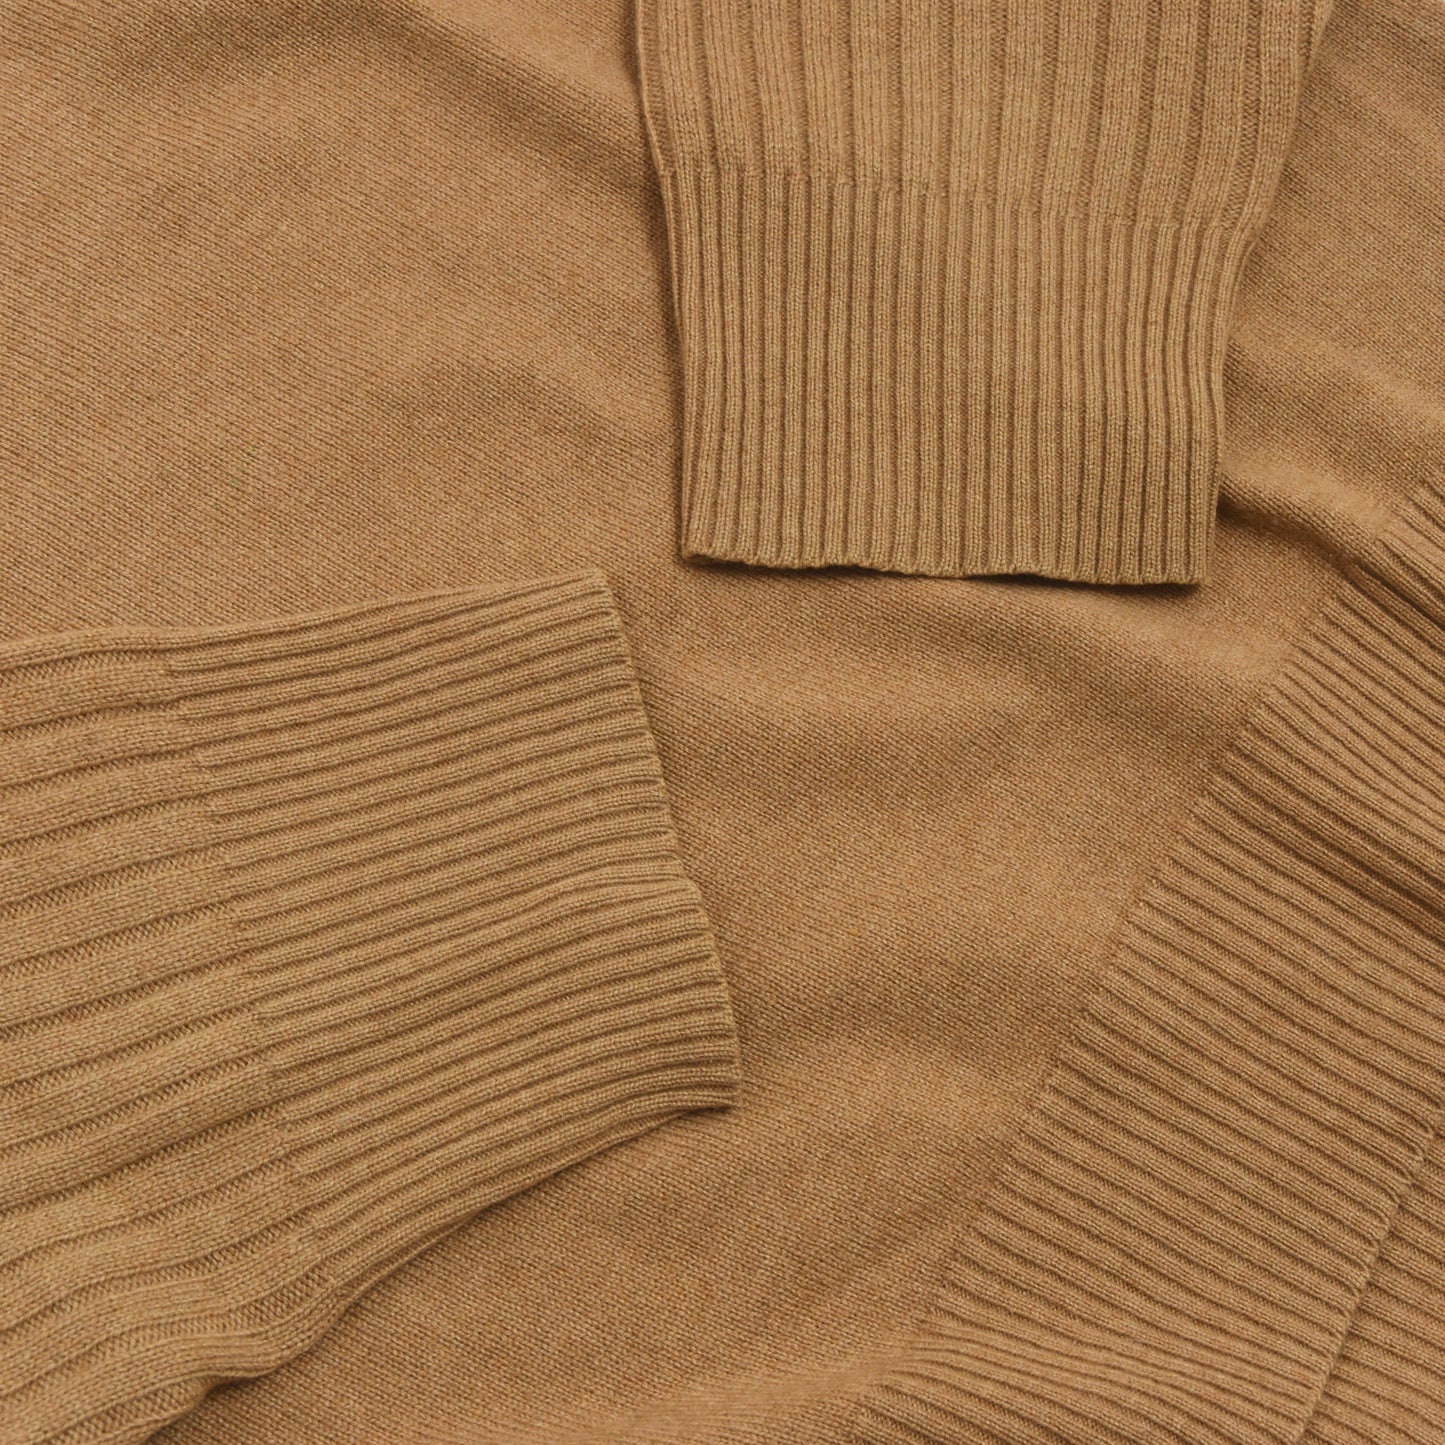 Ermenegildo Zegna Wool/Rayon/Cashmere Turtleneck Sweater Size L 52 - Tan